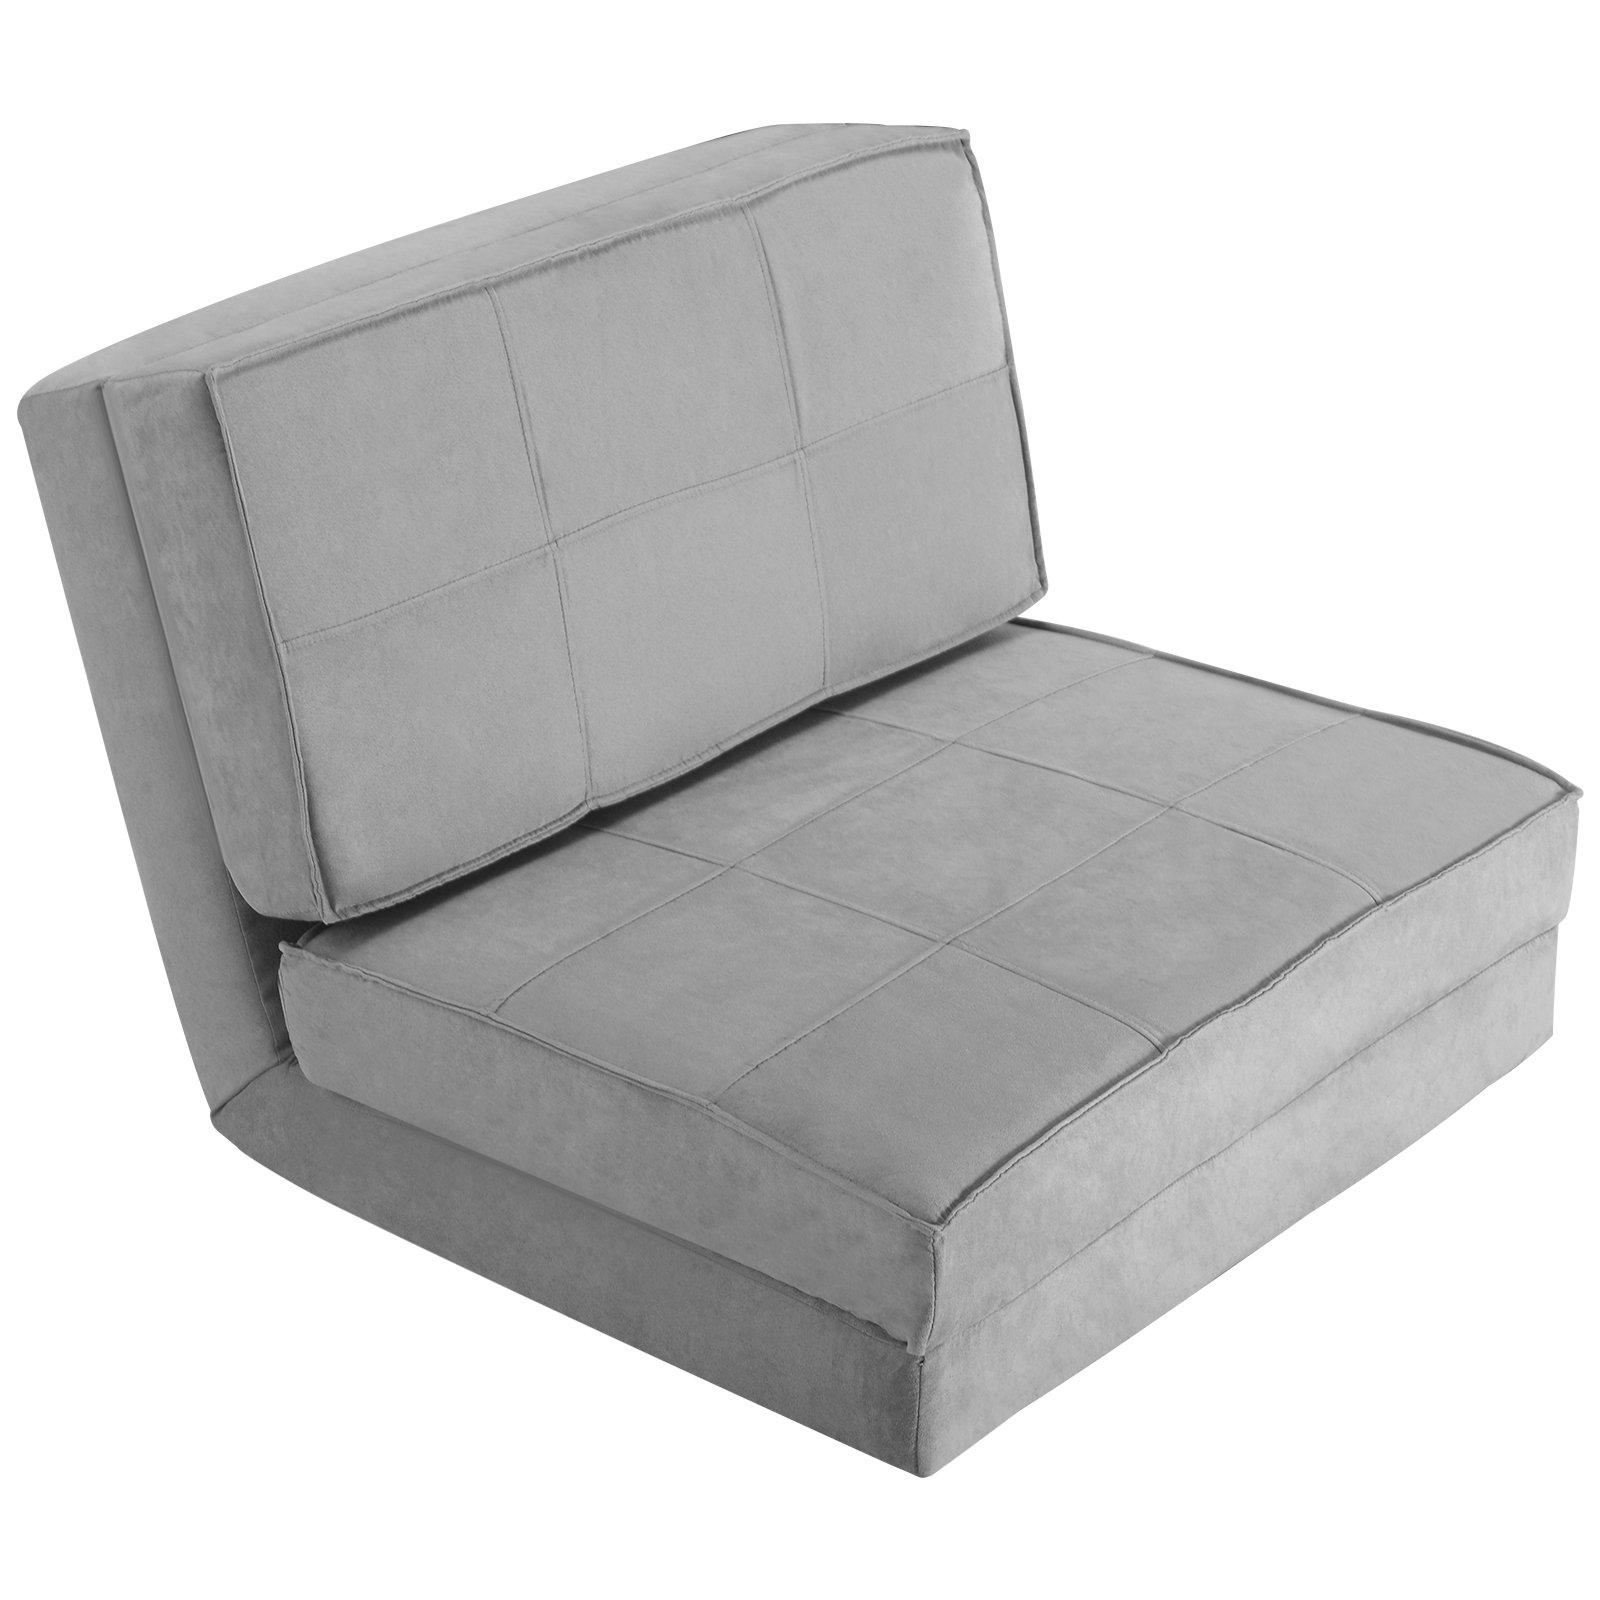 Folding Sofa Bed 5-Position Adjustable Lazy Floor Sofa Chair Lounger Sleeper